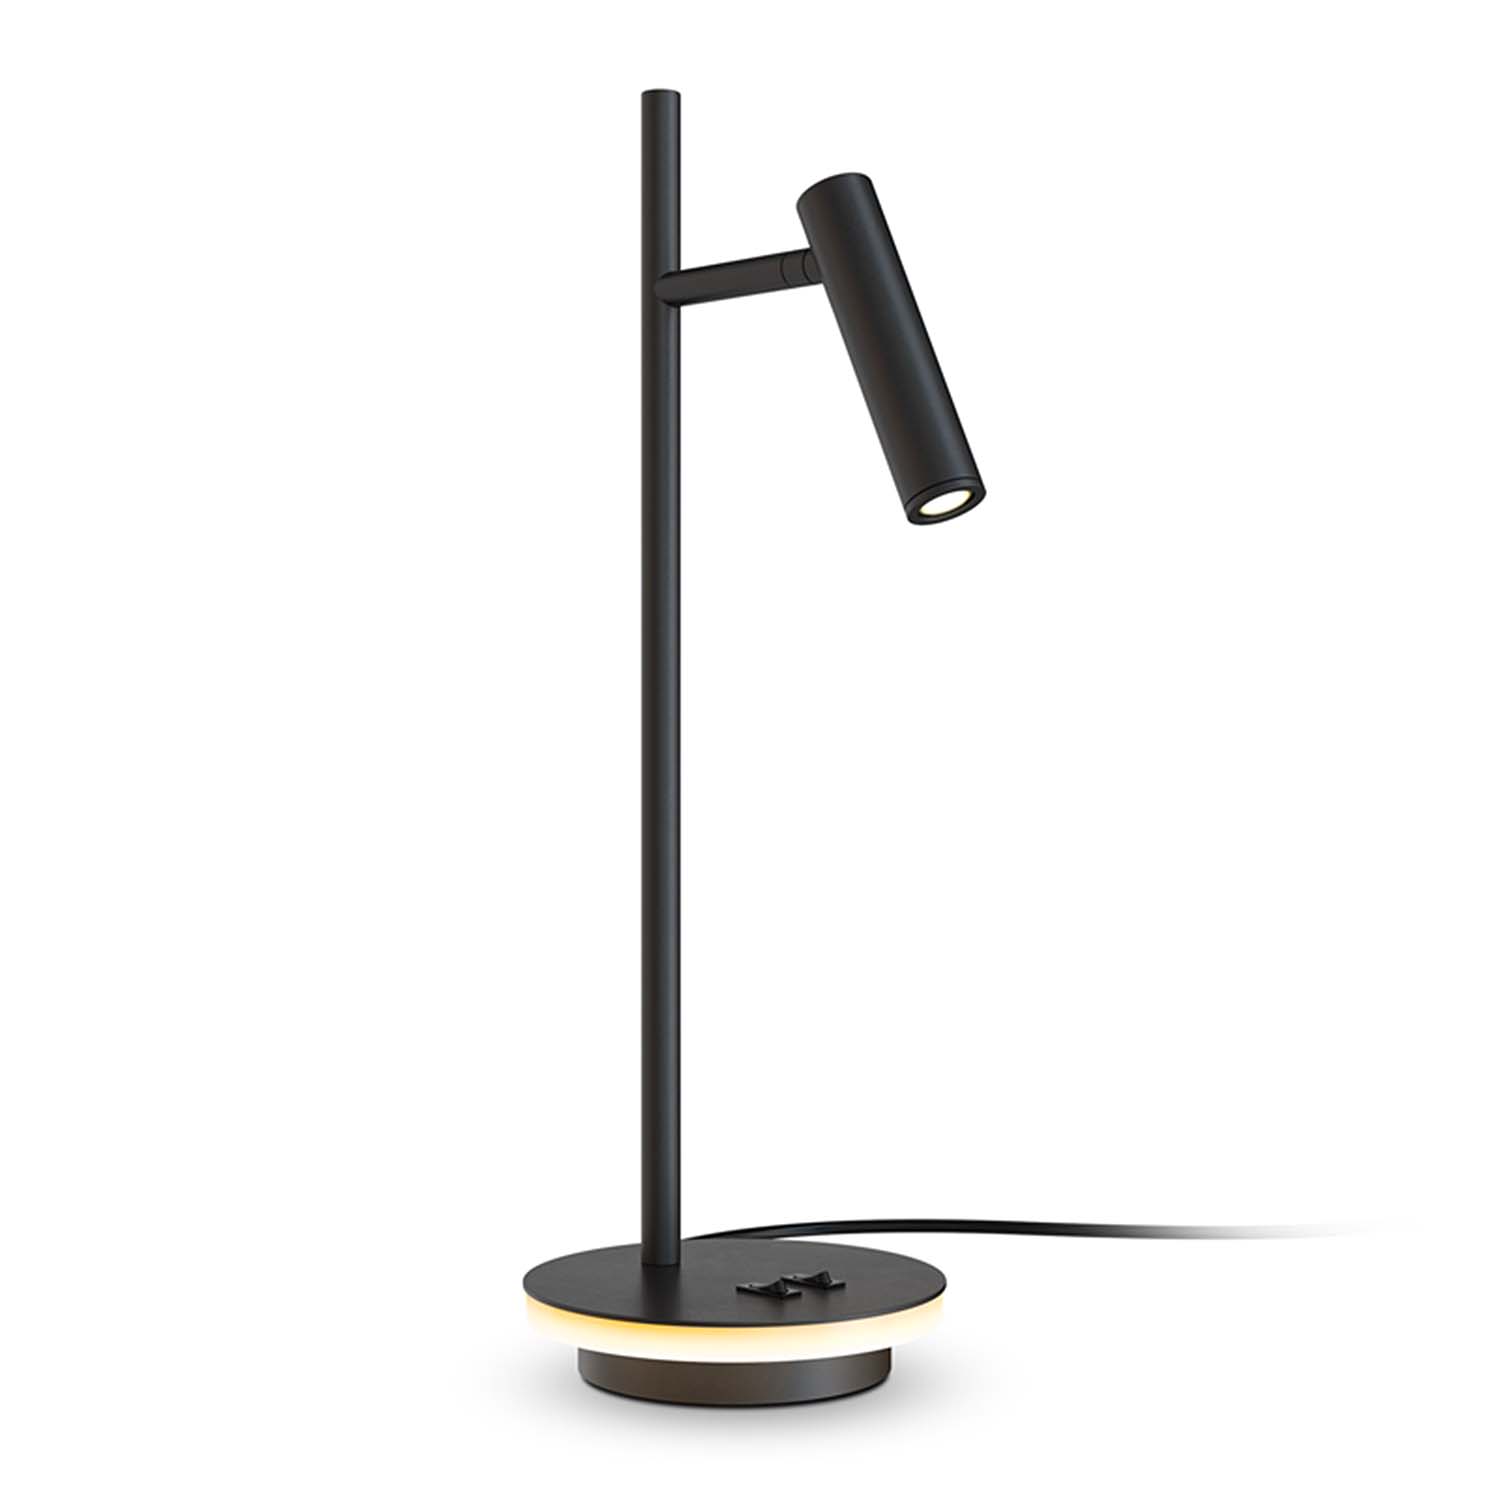 ESTUDO - Adjustable bedside lamp and reading lamp, white or black